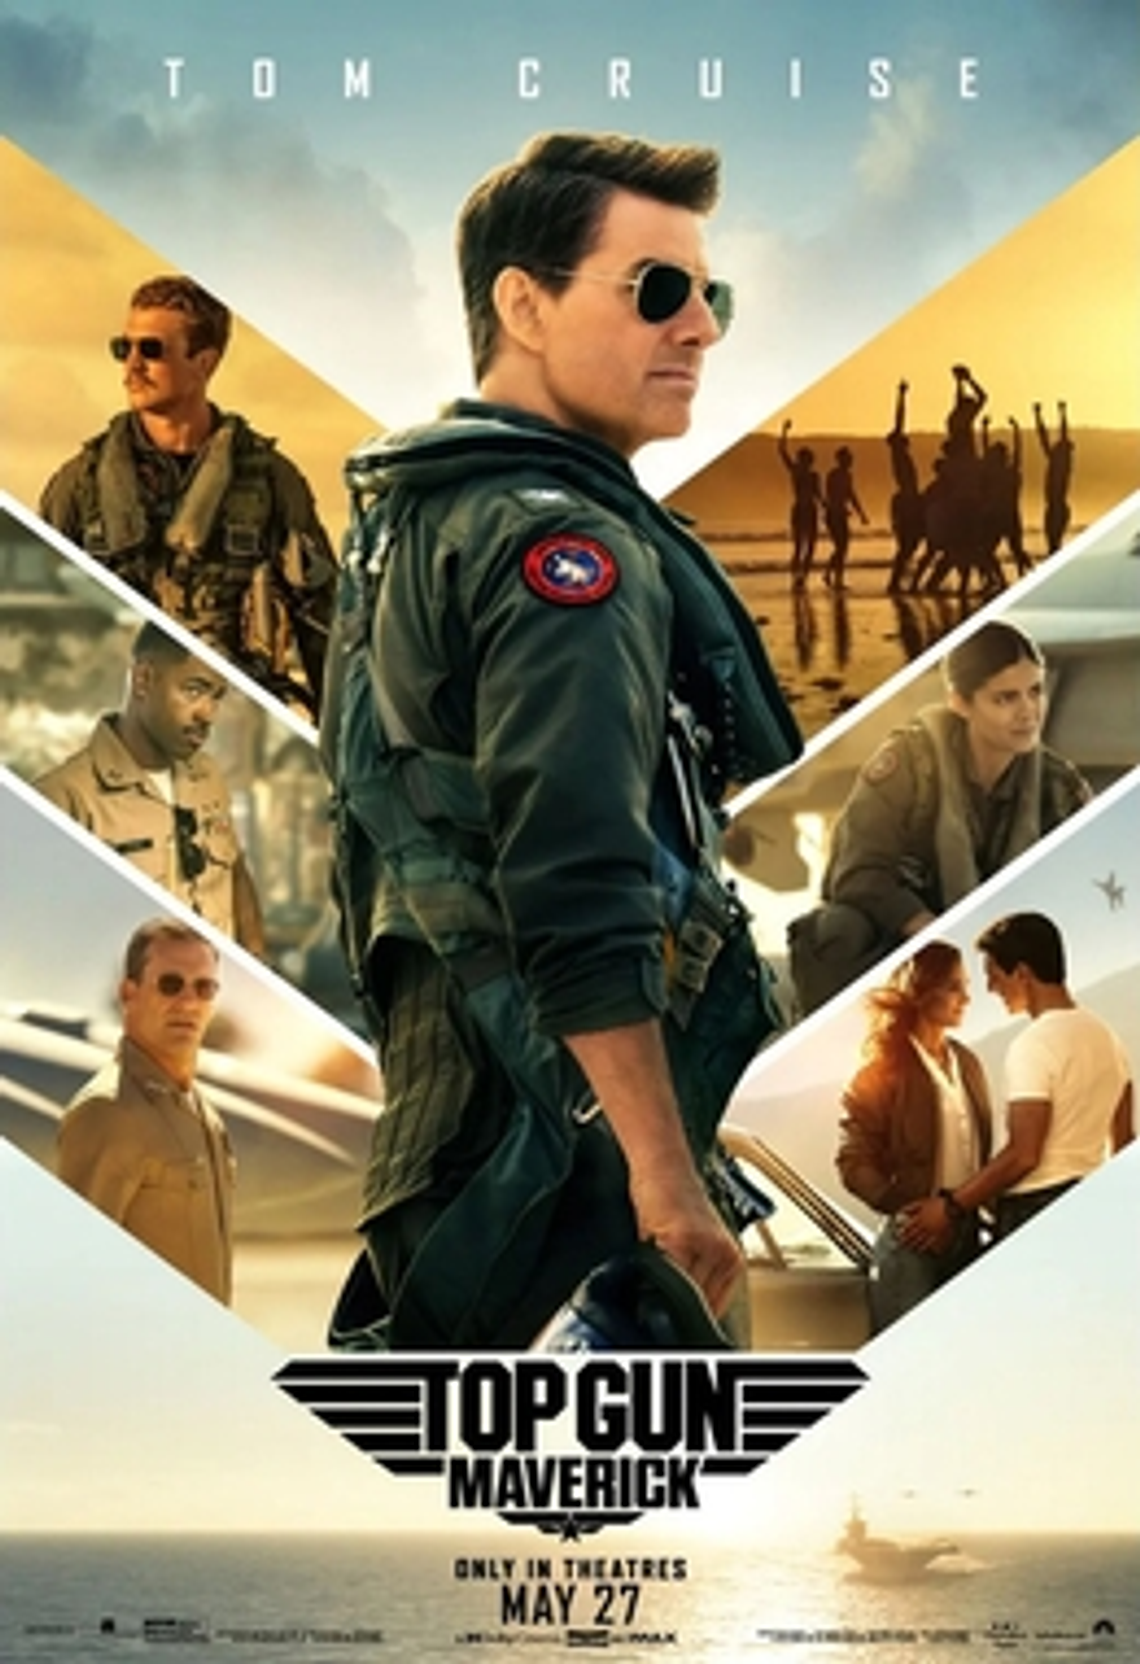 Movie Review: Top Gun - Maverick